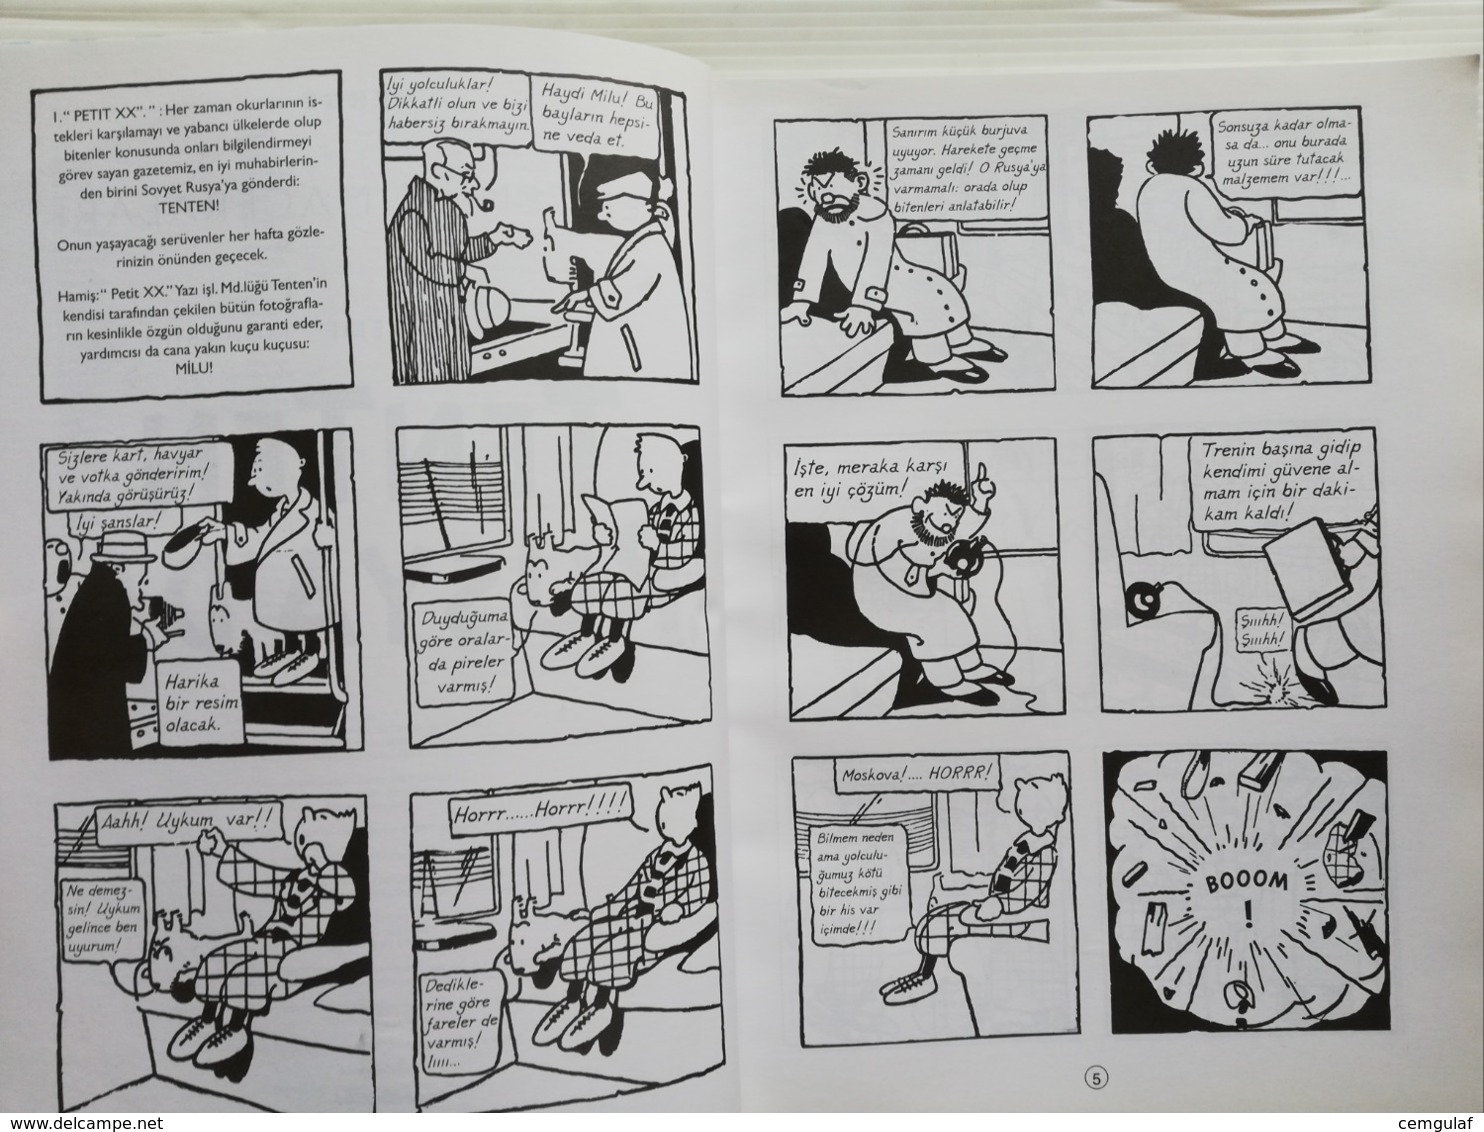 Tintin  TURKISH EDITION/ Adventures Of TINTIN " TENTEN IN RUSSIA" - Comics & Mangas (other Languages)